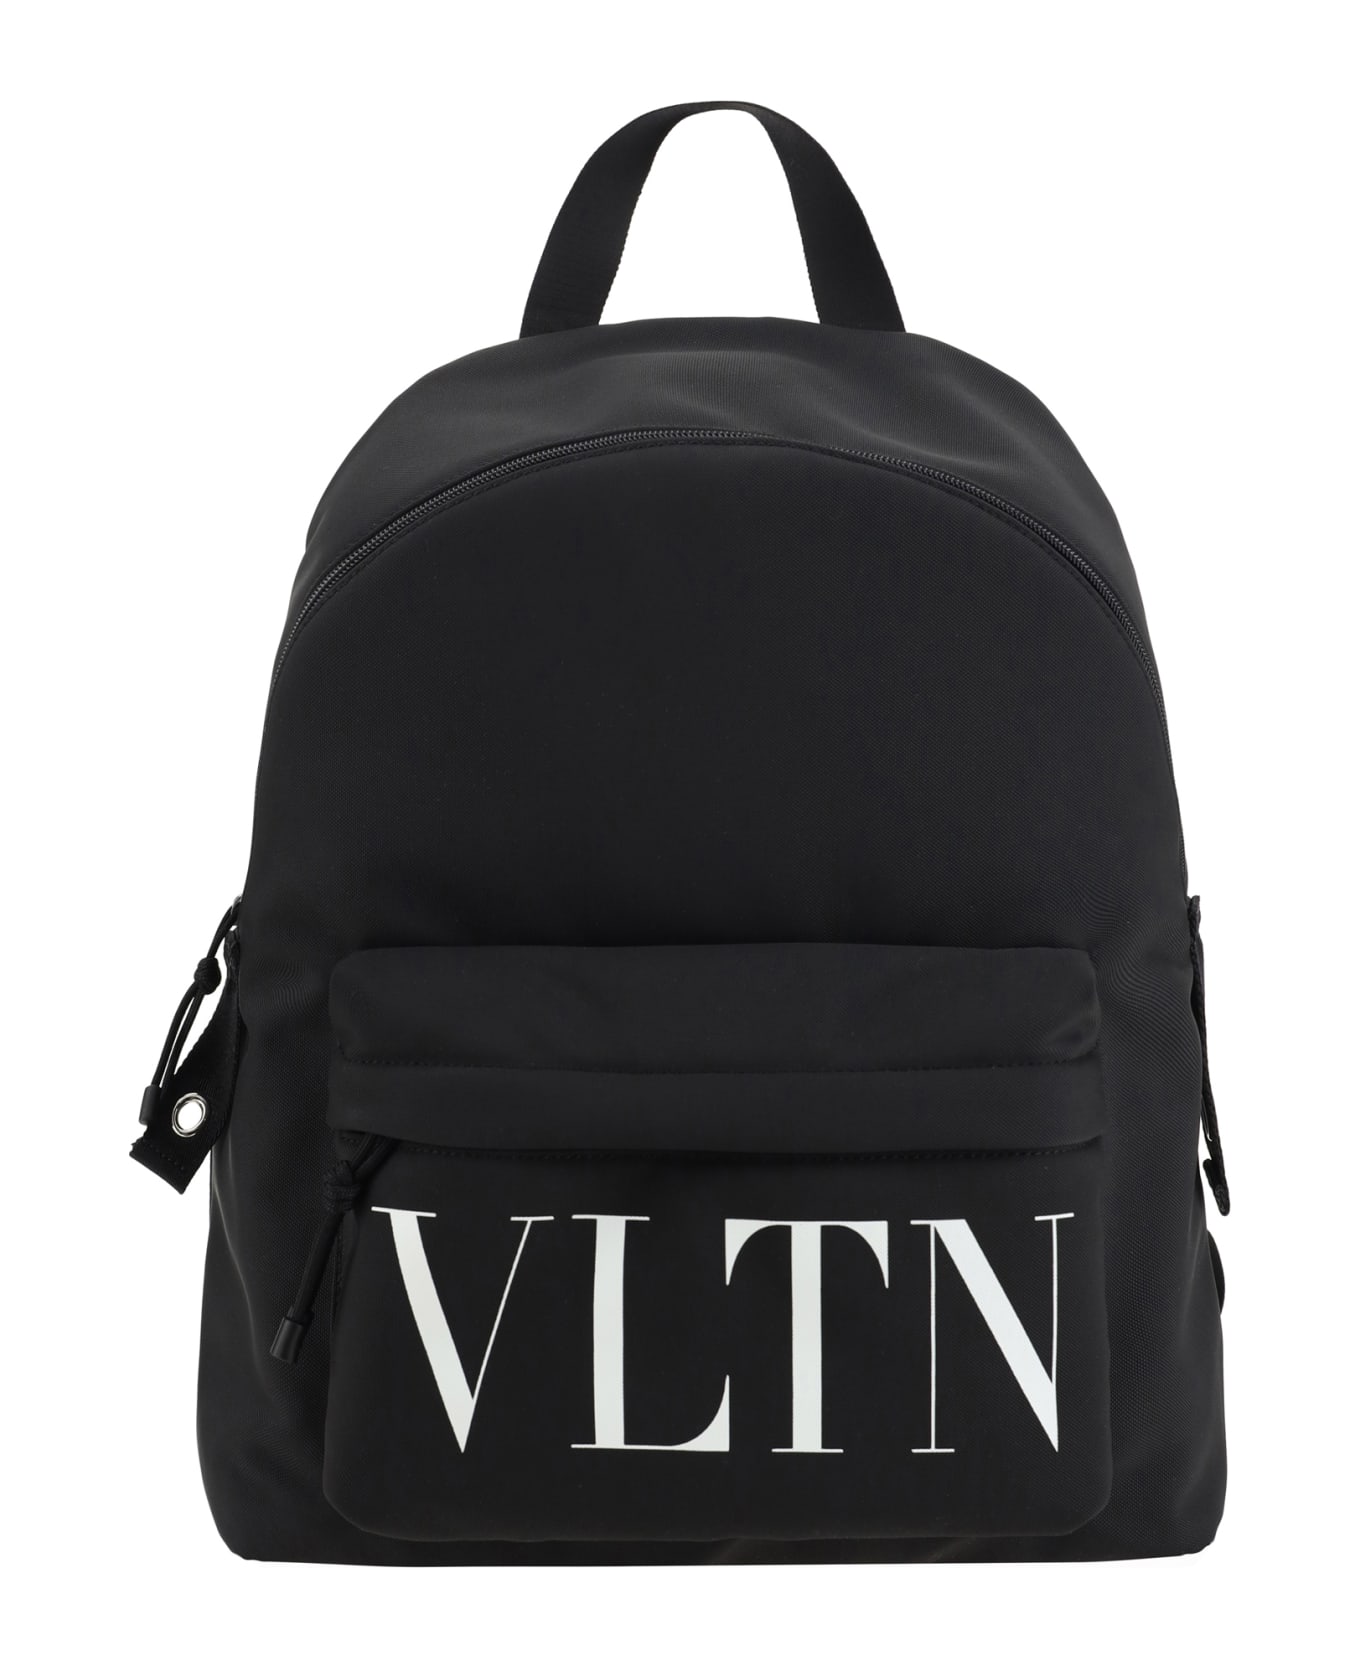 Valentino Garavani Vltn Backpack - Black